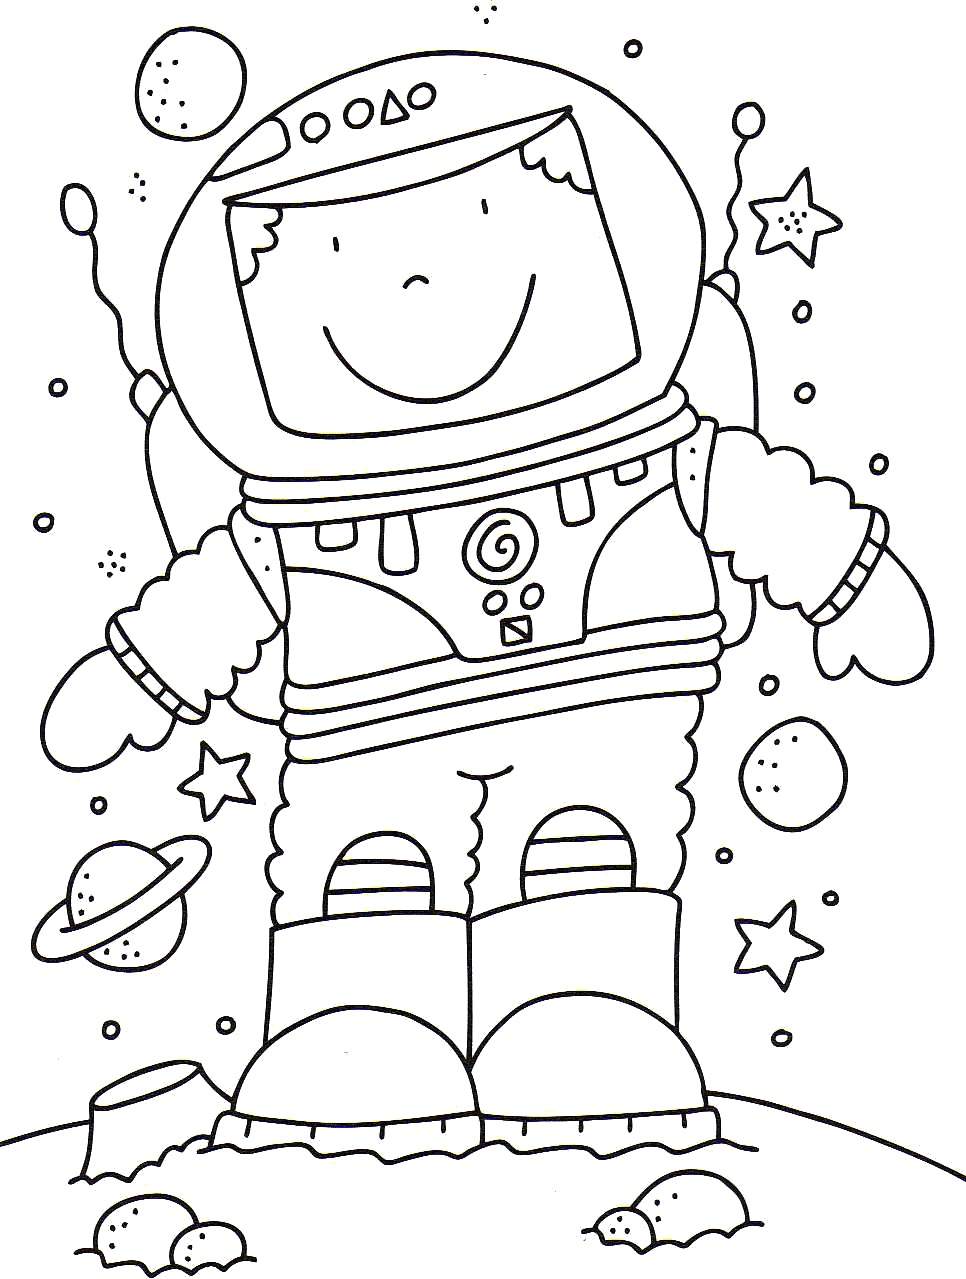 Картинки космос раскраска. Космос раскраска для детей. Раскраска. В космосе. Космические раскраски для детей. Детские раскраски космос.